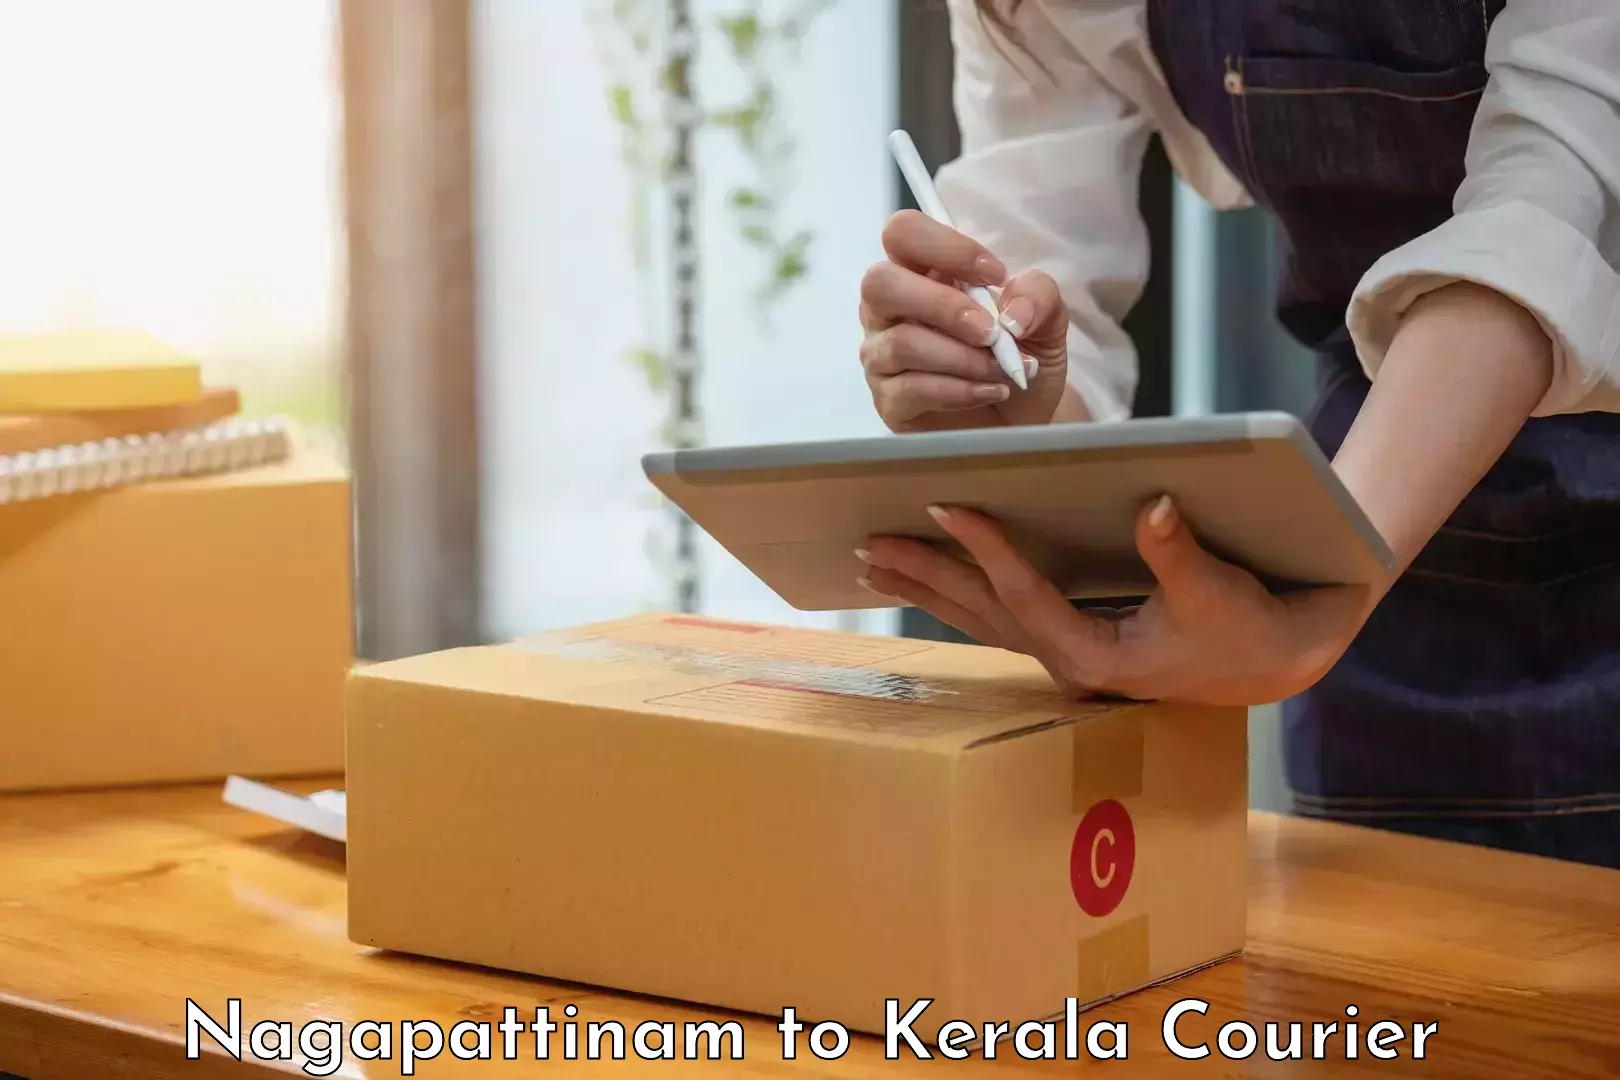 Professional courier handling Nagapattinam to Kochi